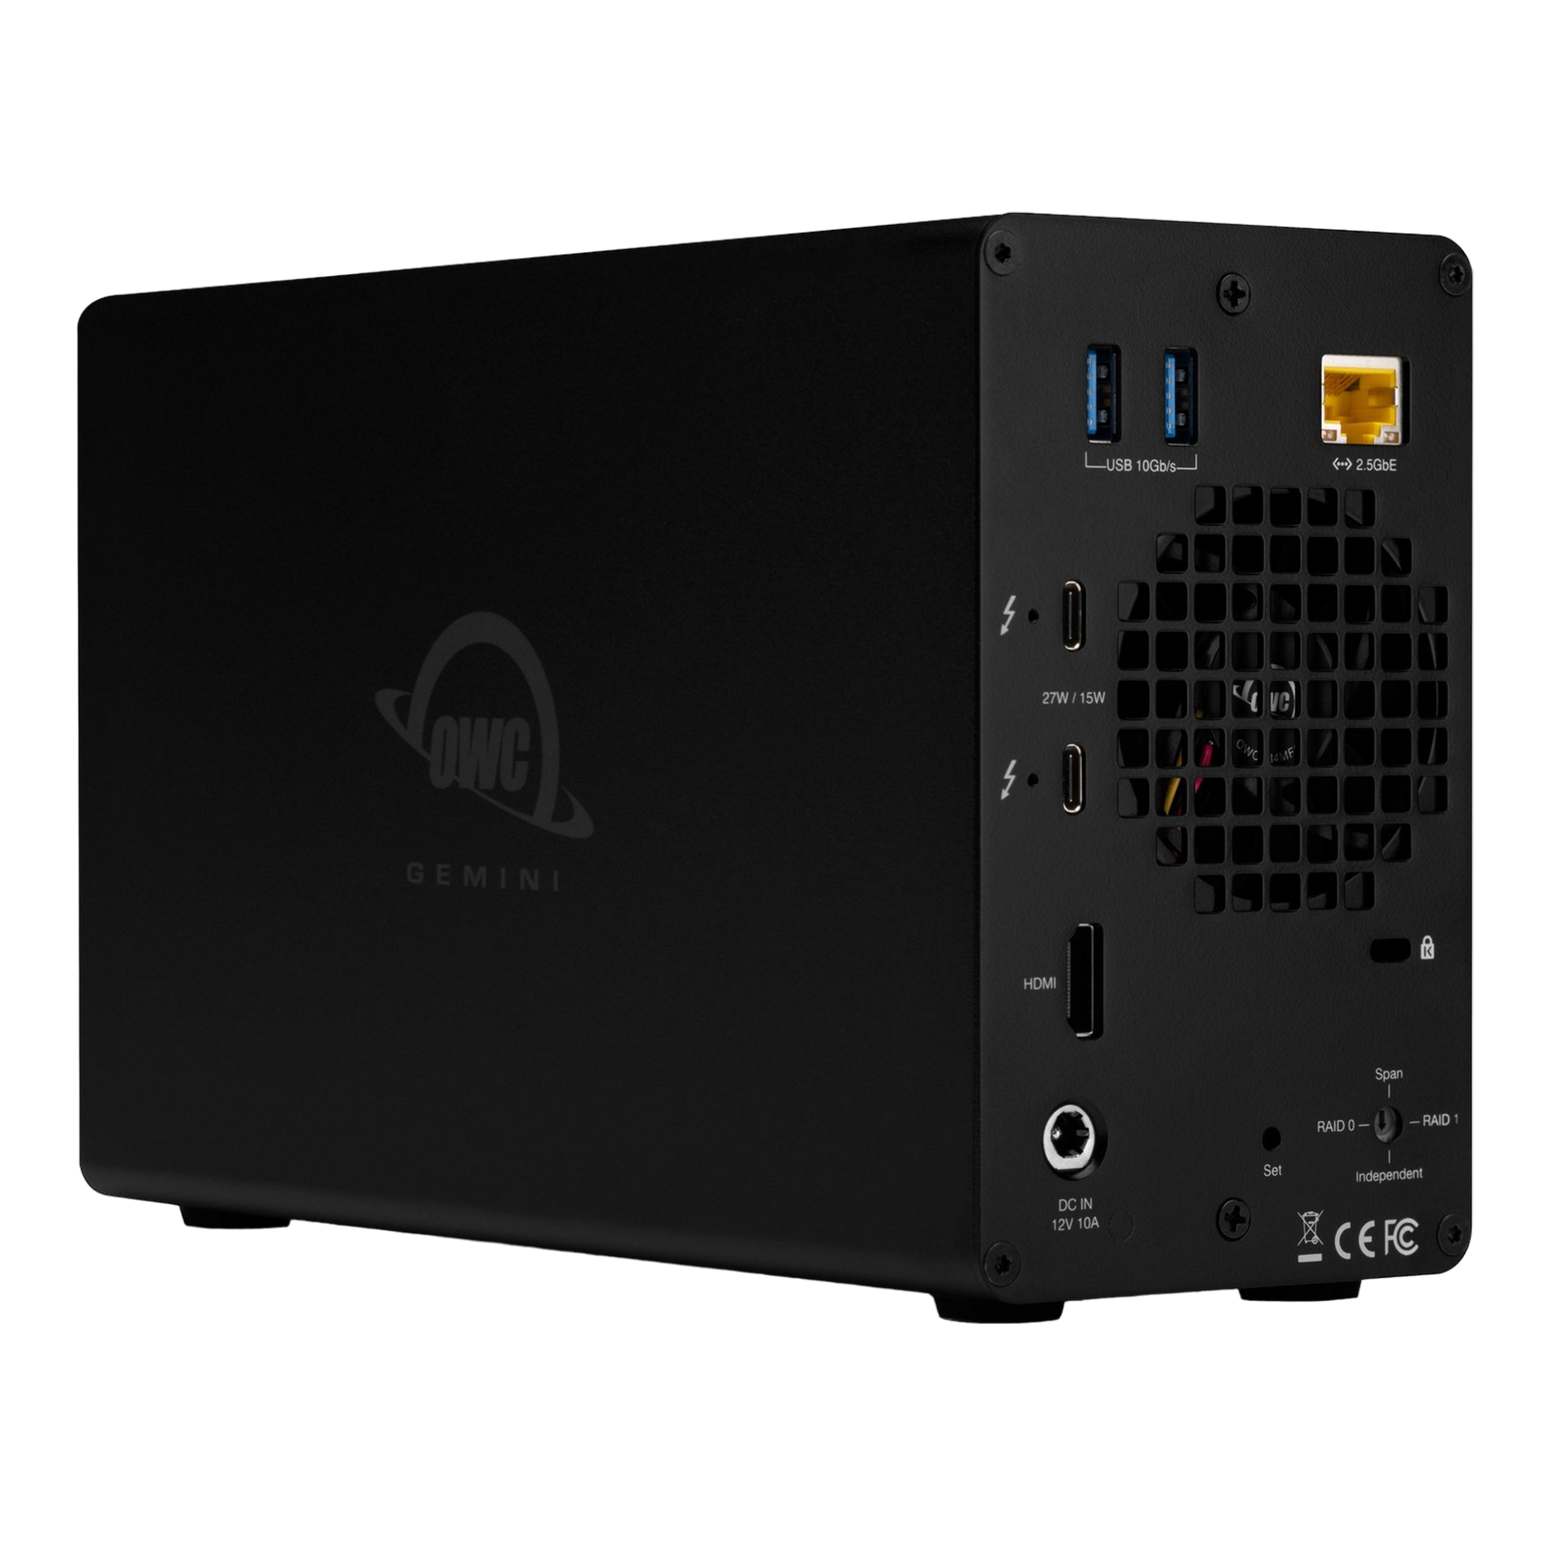 OWC 4TB Gemini Dock and Dual-Drive HDD RAID External Storage Solution